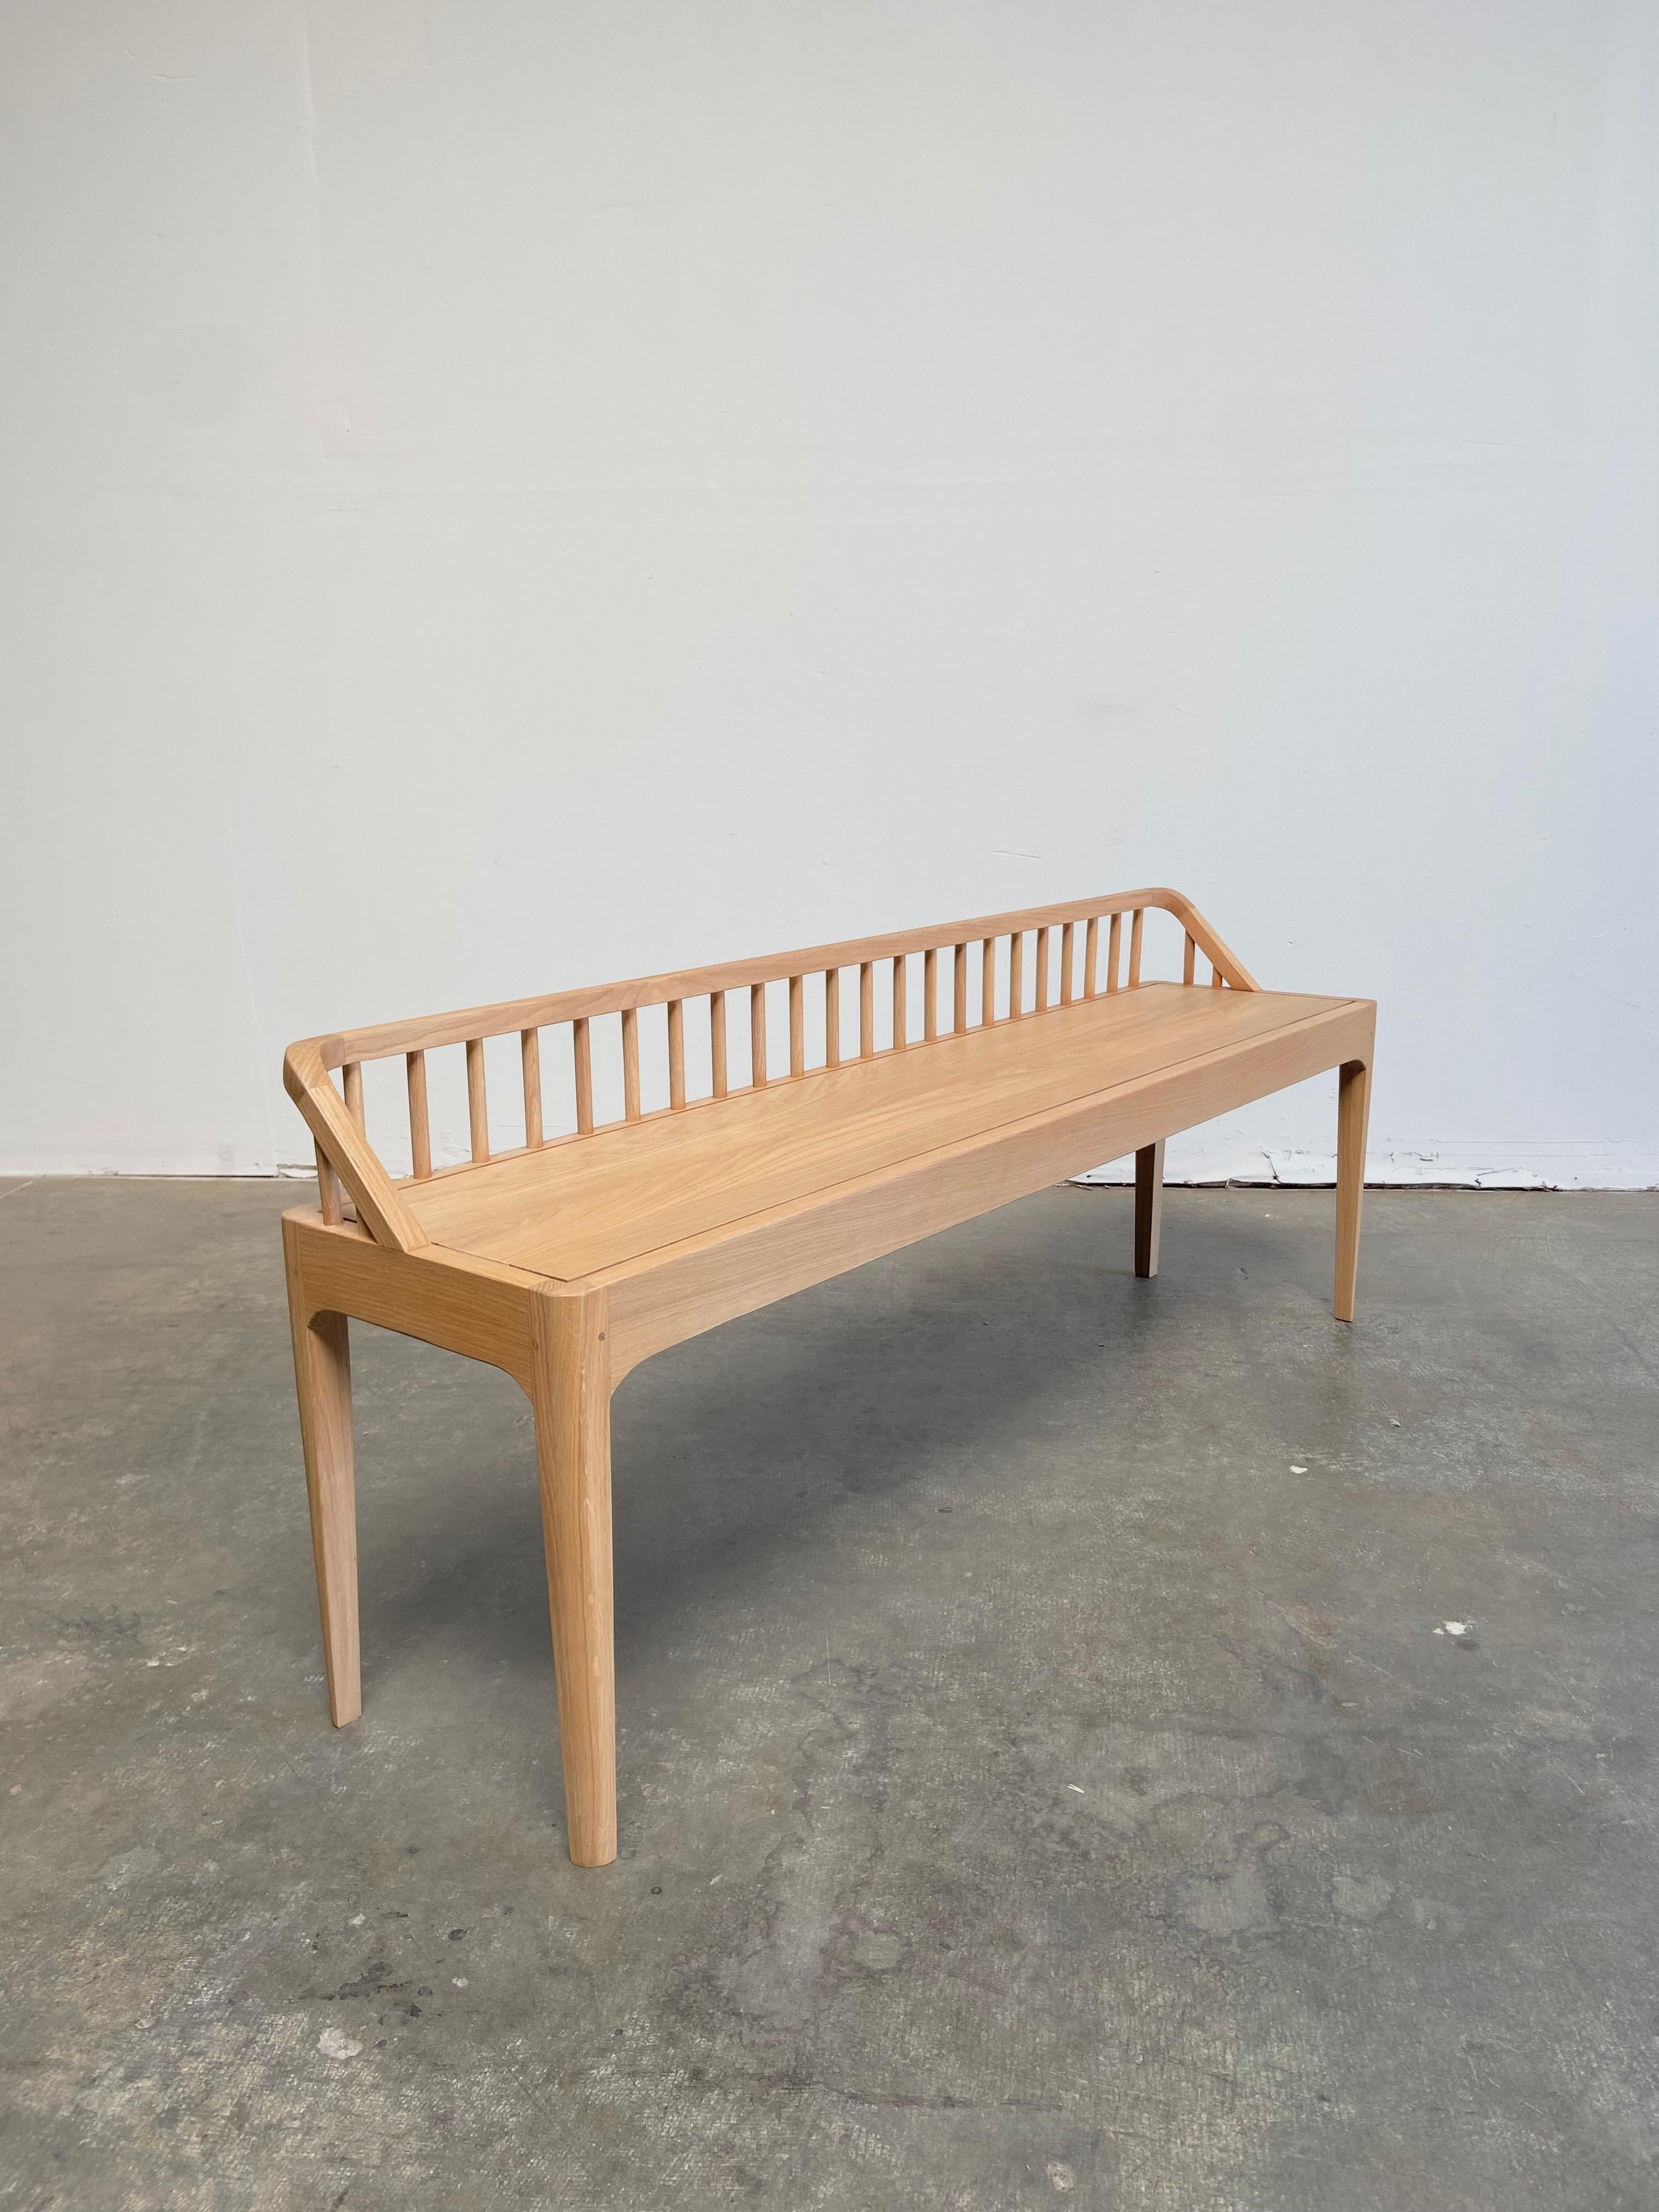 Modern white qak spindle bench
Size:59”W x 13.75